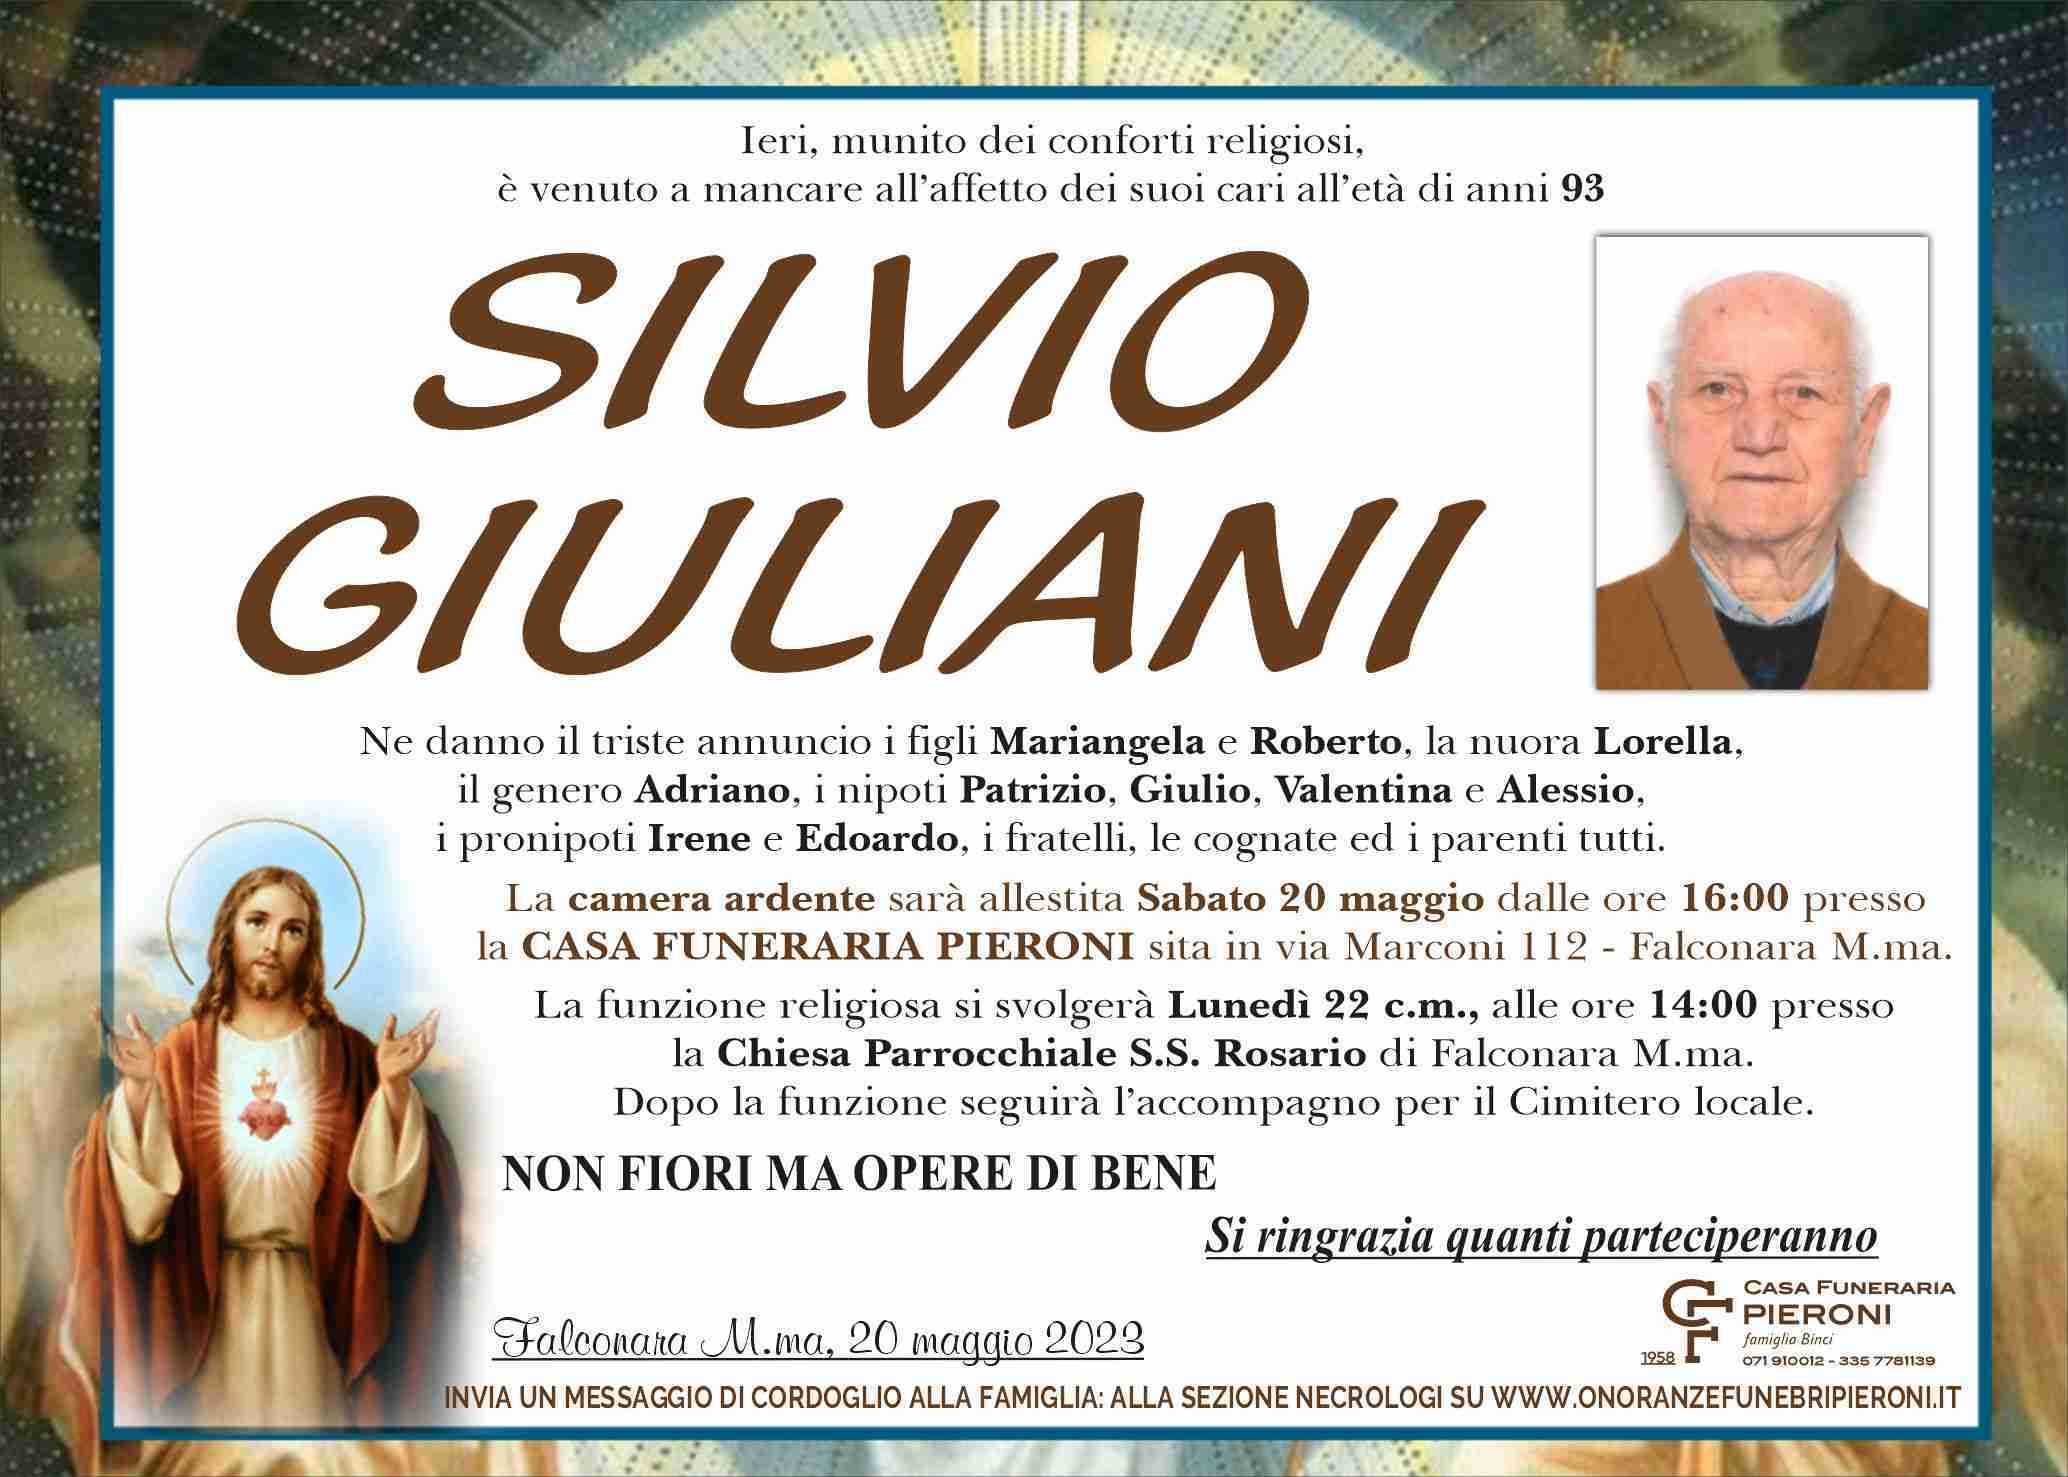 Silvio Giuliani